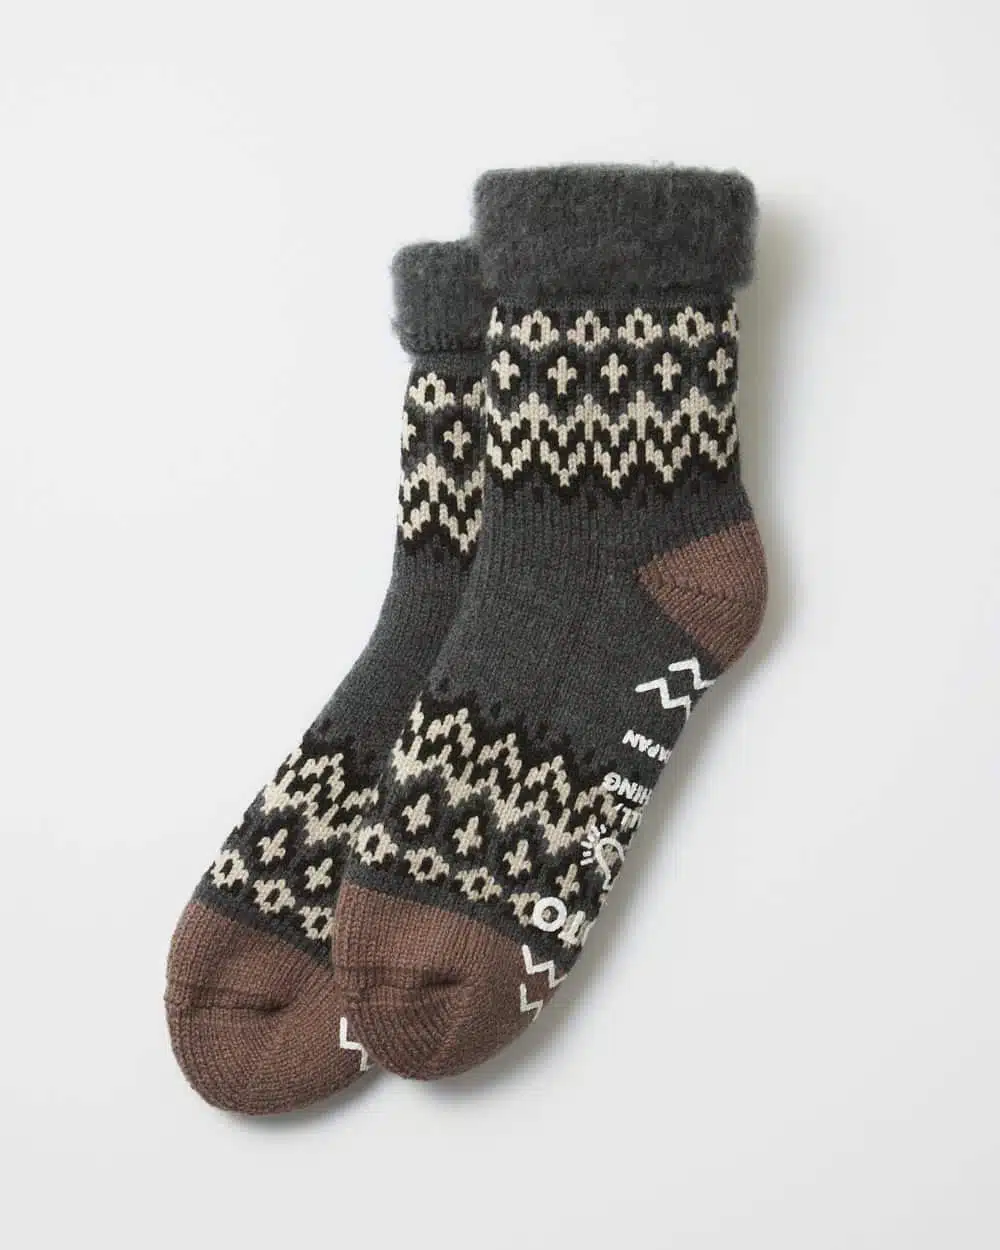 RoToTo Comfy Room Socks "Nordic" - Charcoal